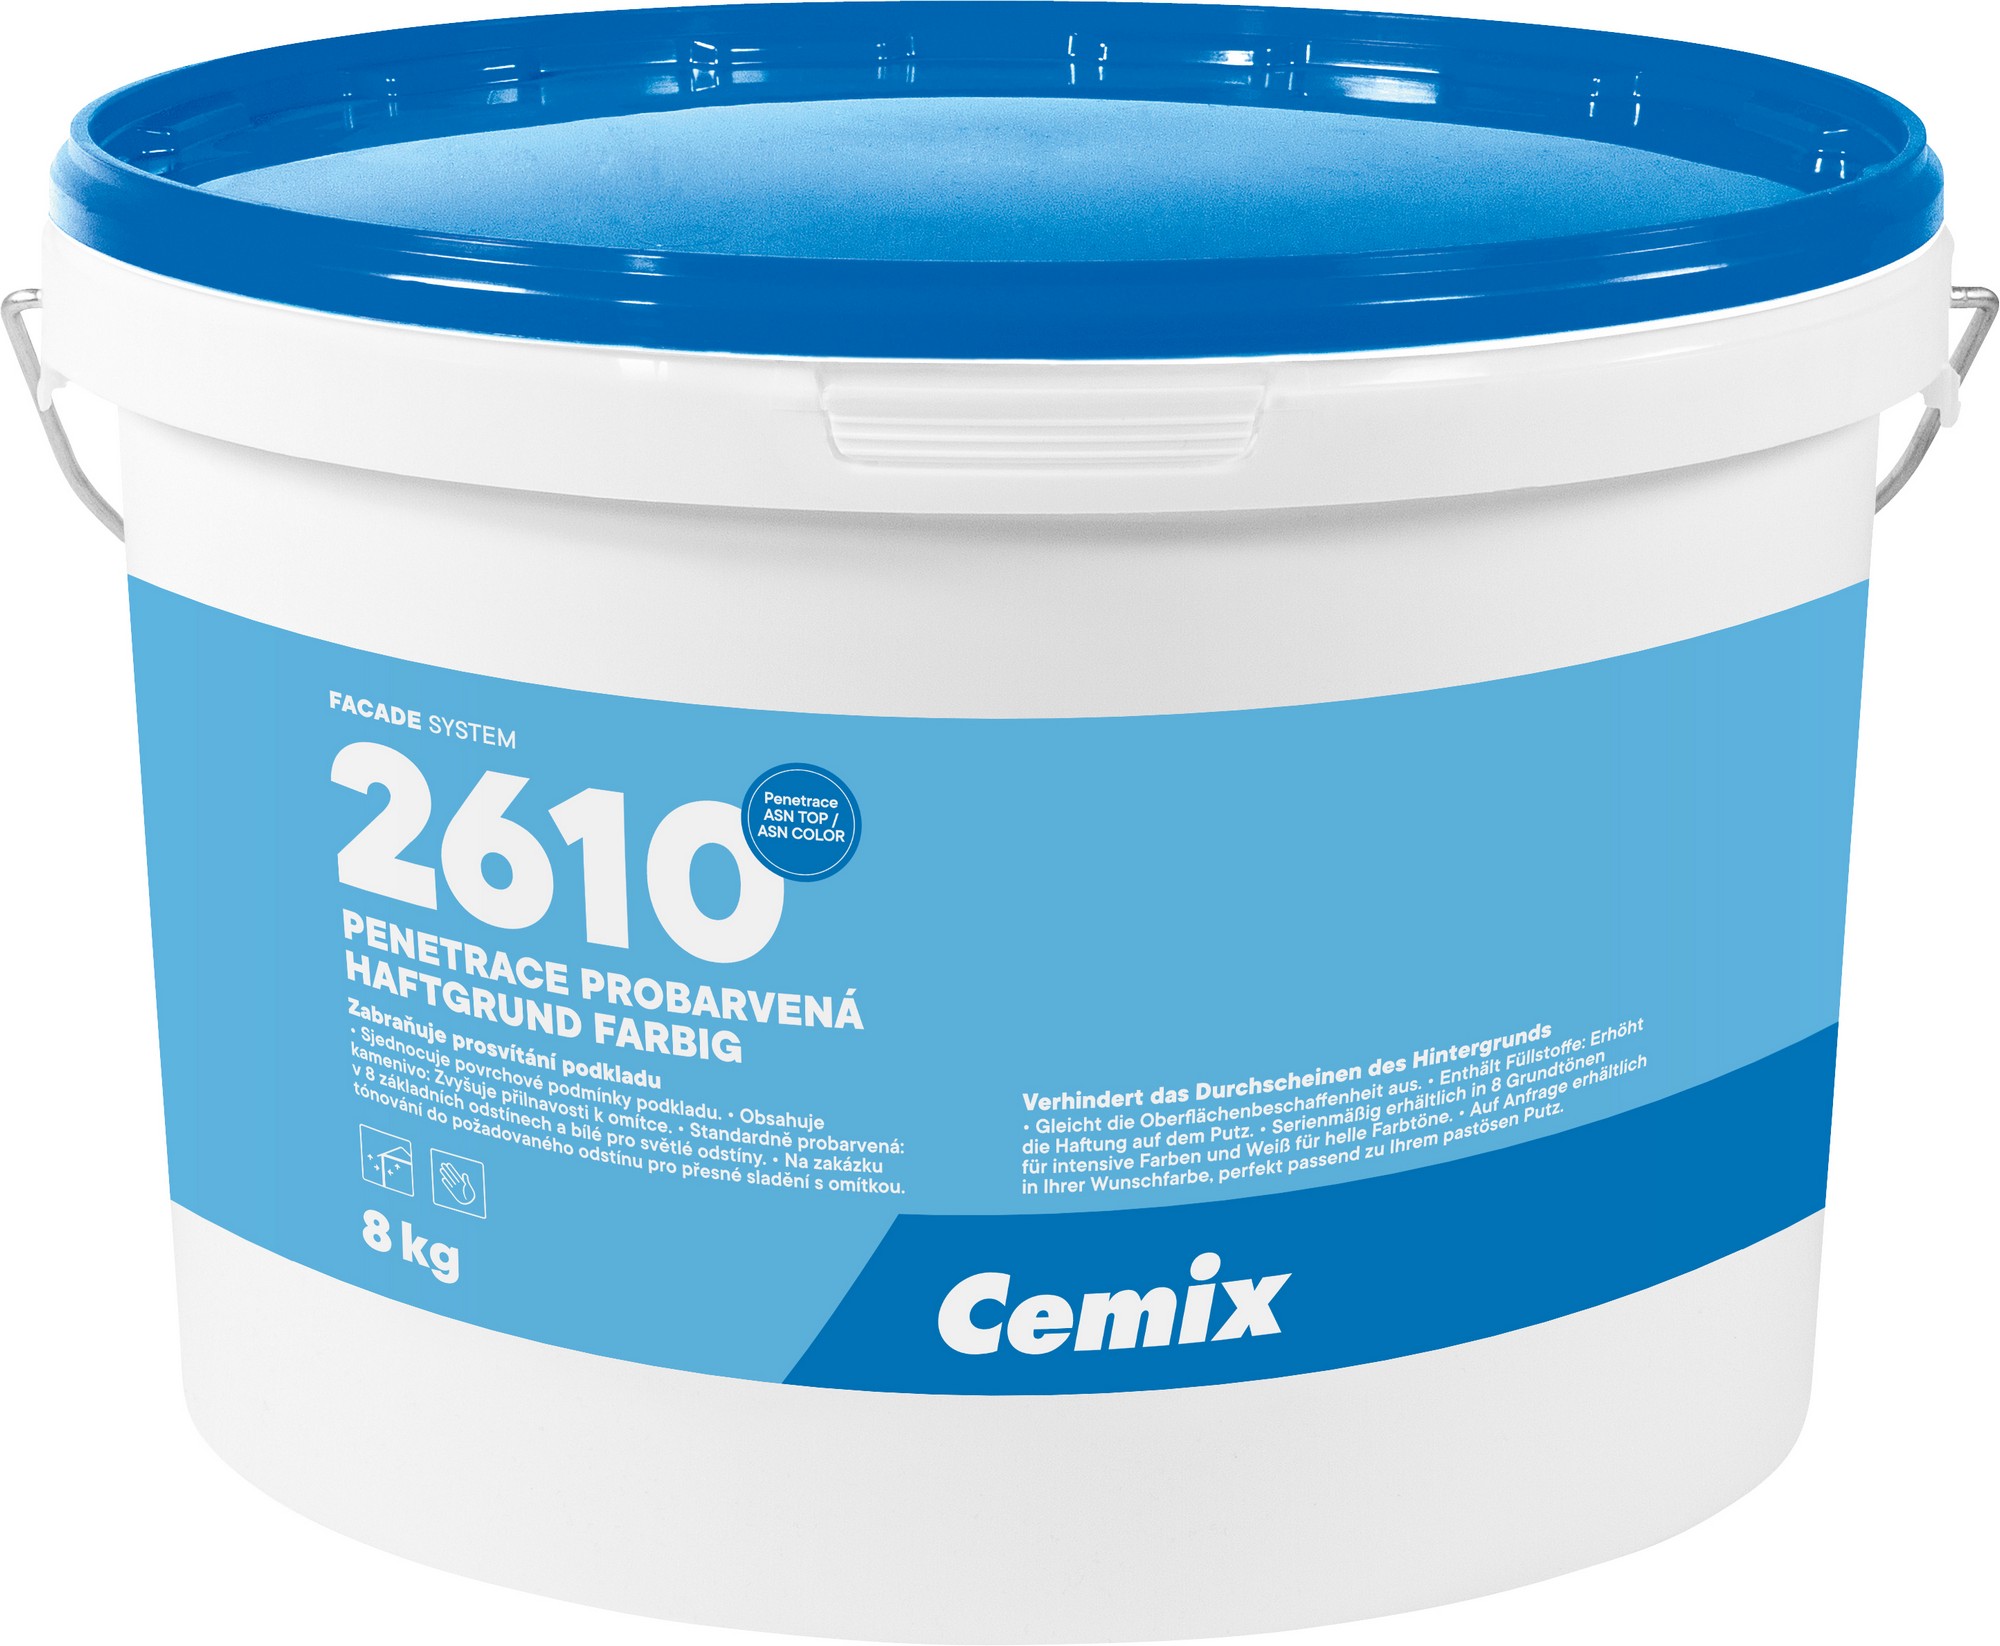 Penetrace probarvená Cemix 2610 modrá 8 kg